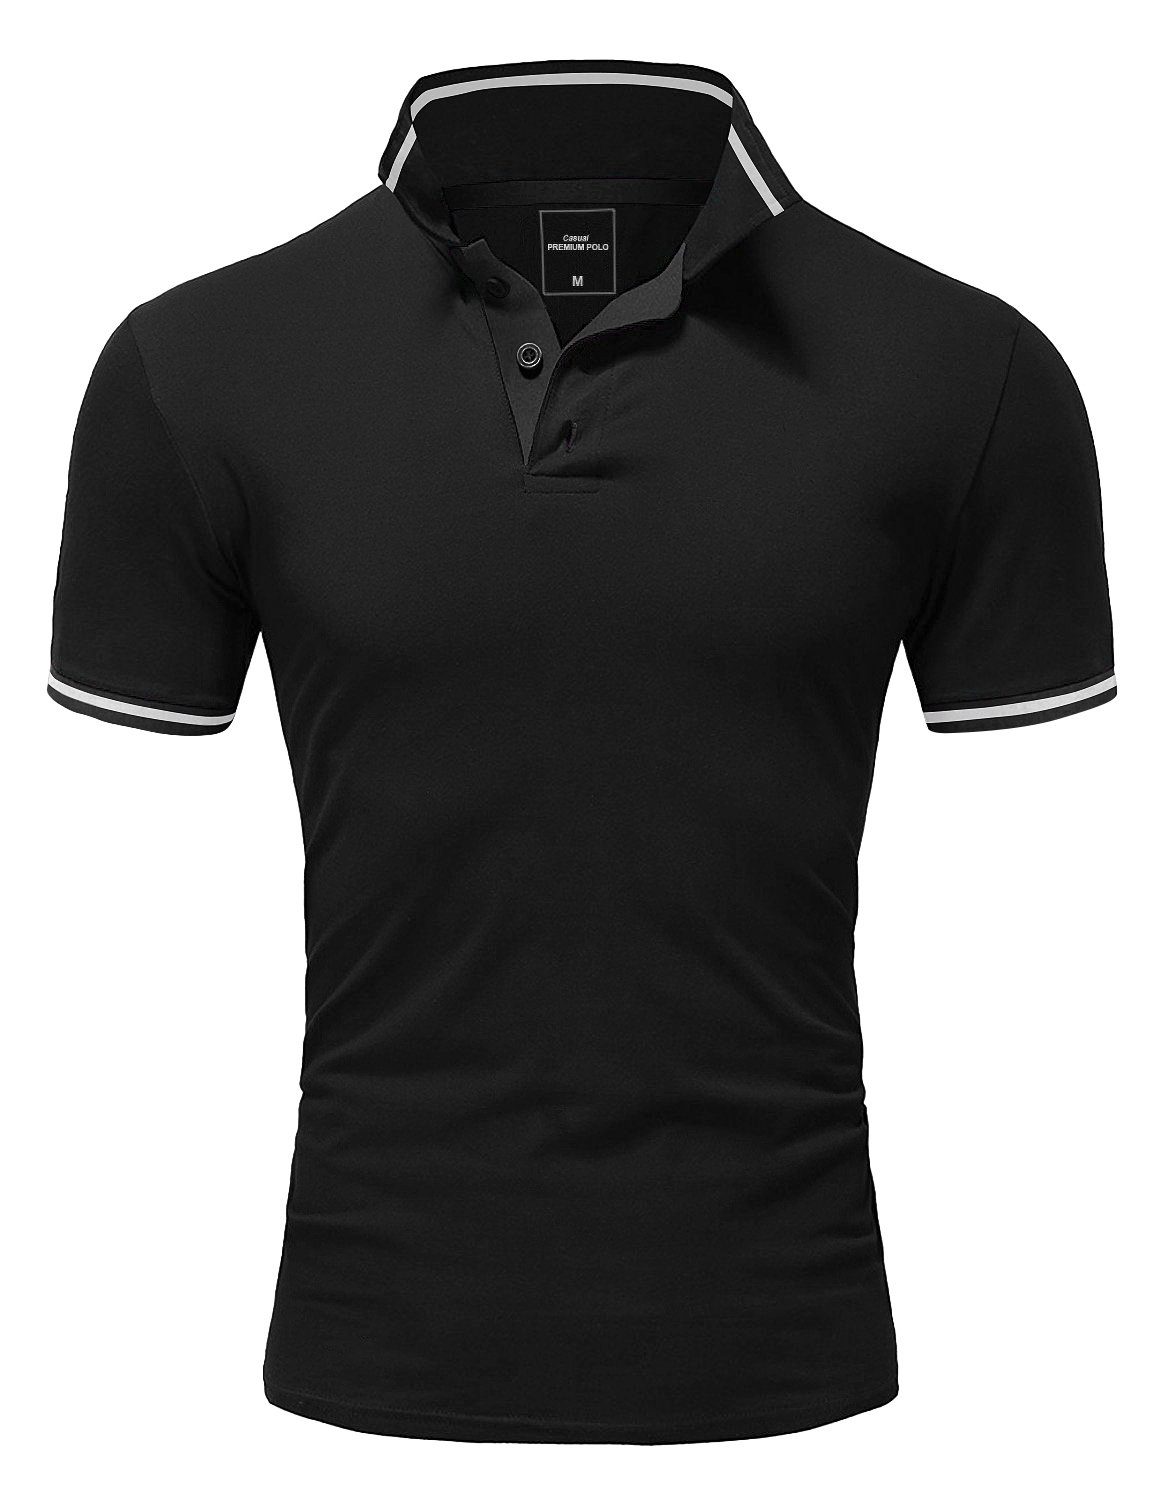 Amaci&Sons Poloshirt PROVIDENCE Herren Basic Kontrast Kurzarm Polohemd T-Shirt Schwarz/Weiß